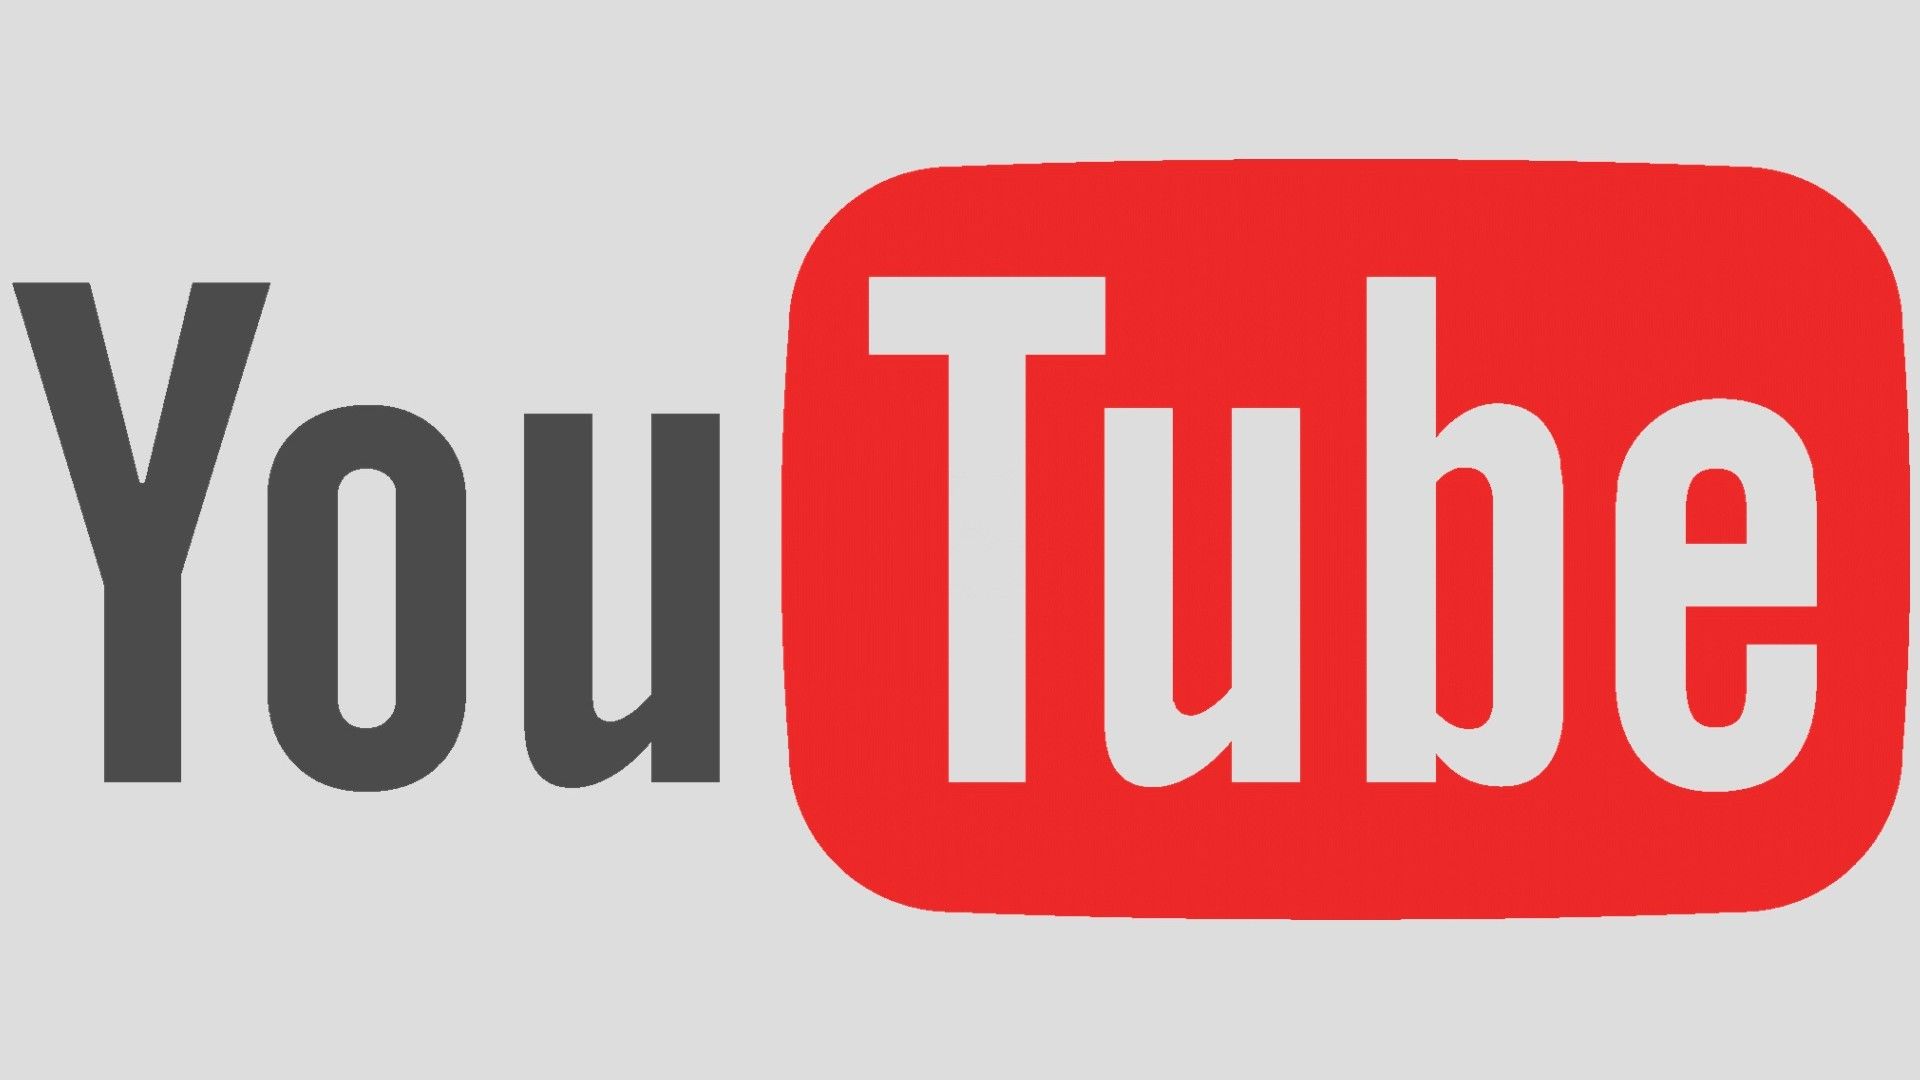 cool youtube logo